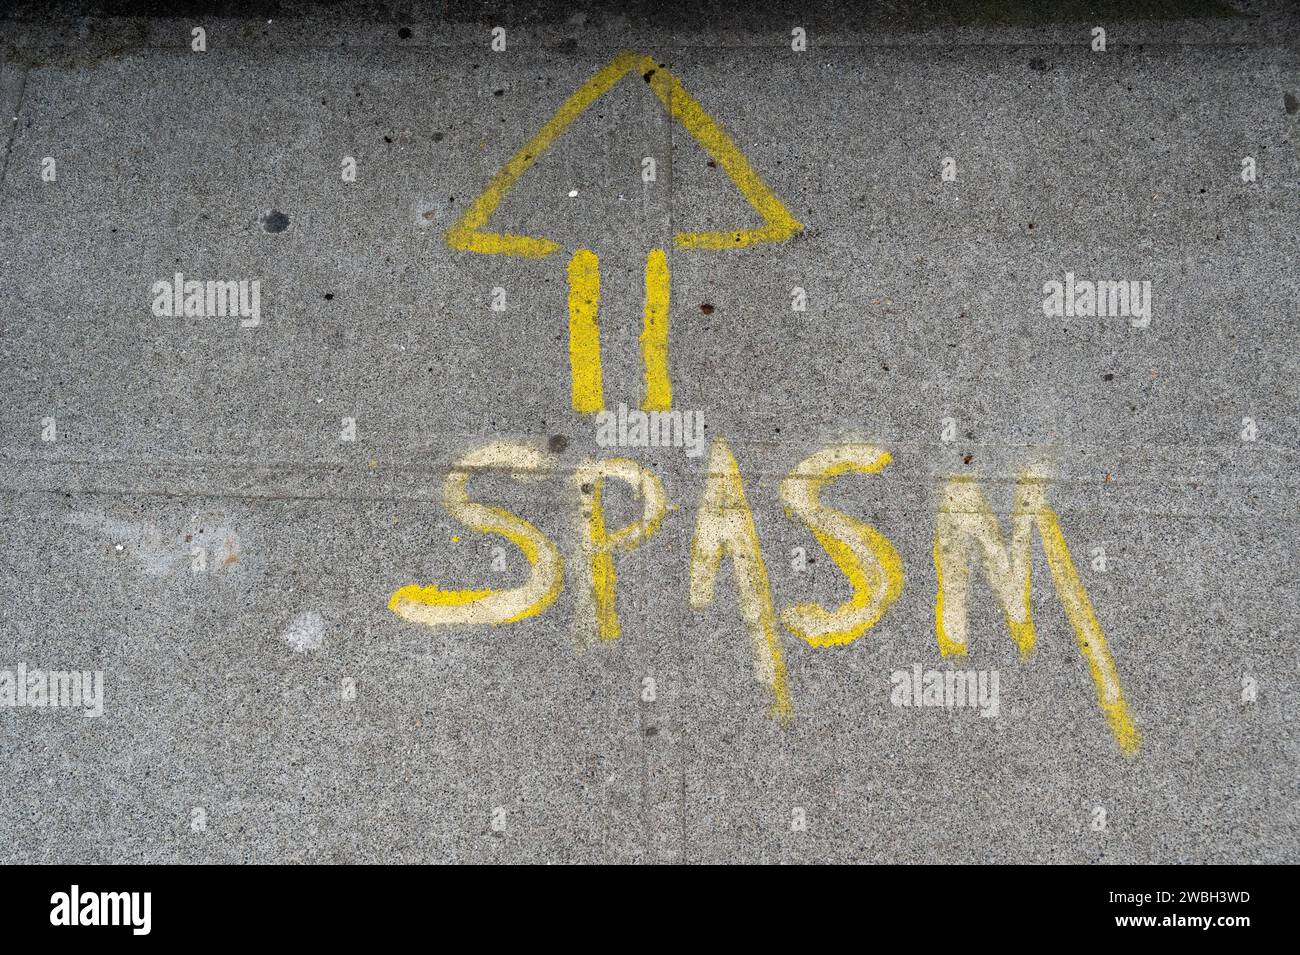 Sidewalk graffiti in New York Stock Photo